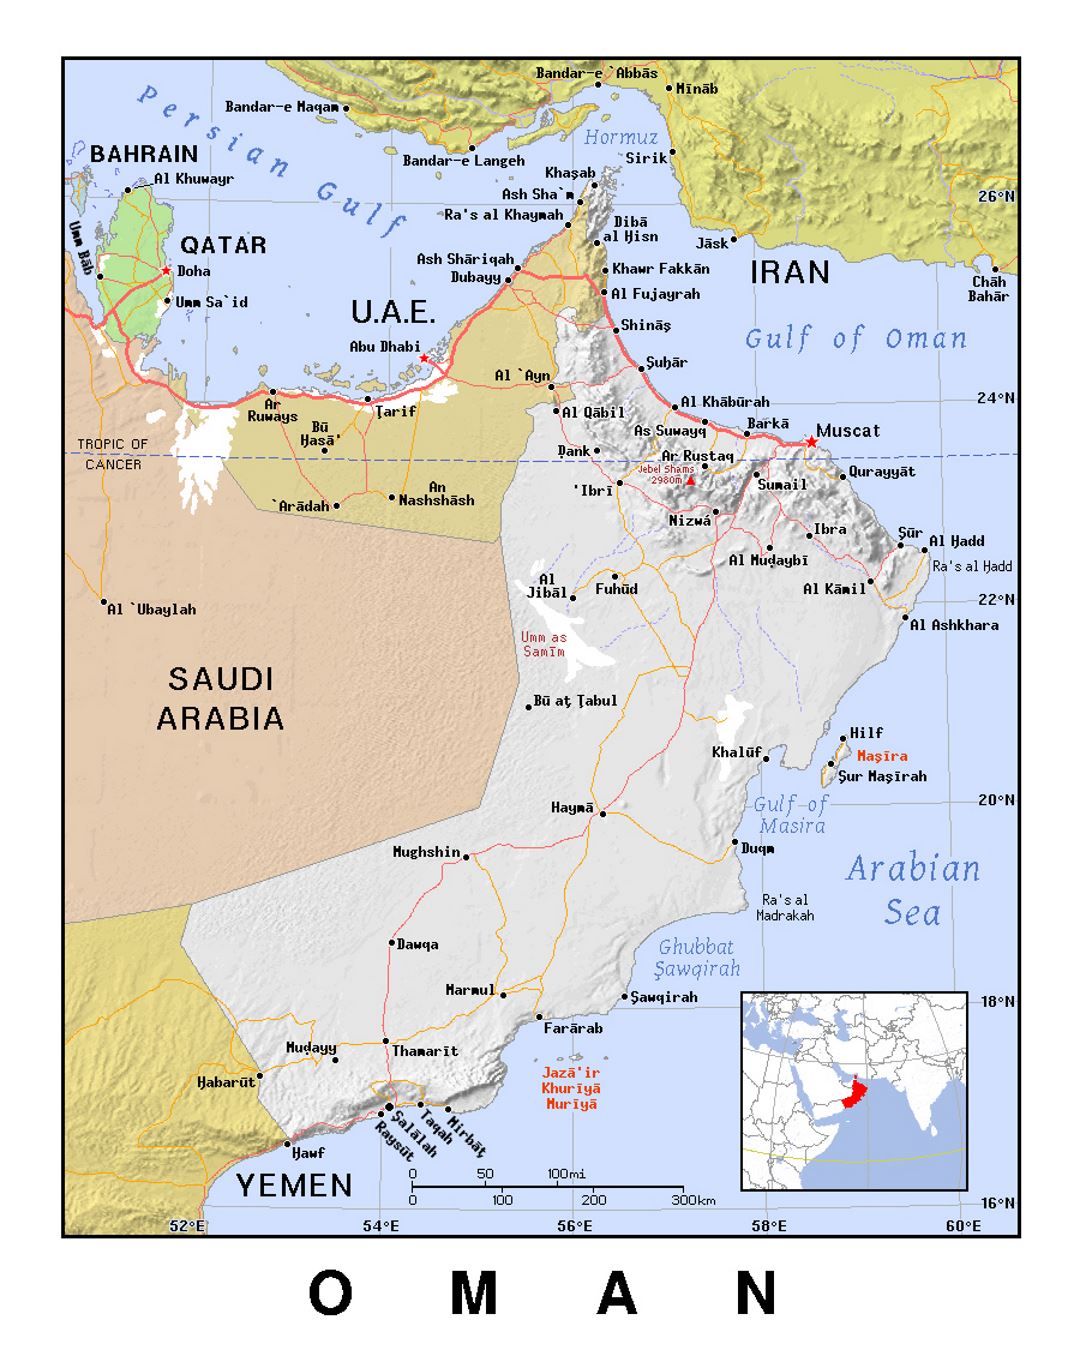 Detallado mapa político de Omán con relieve